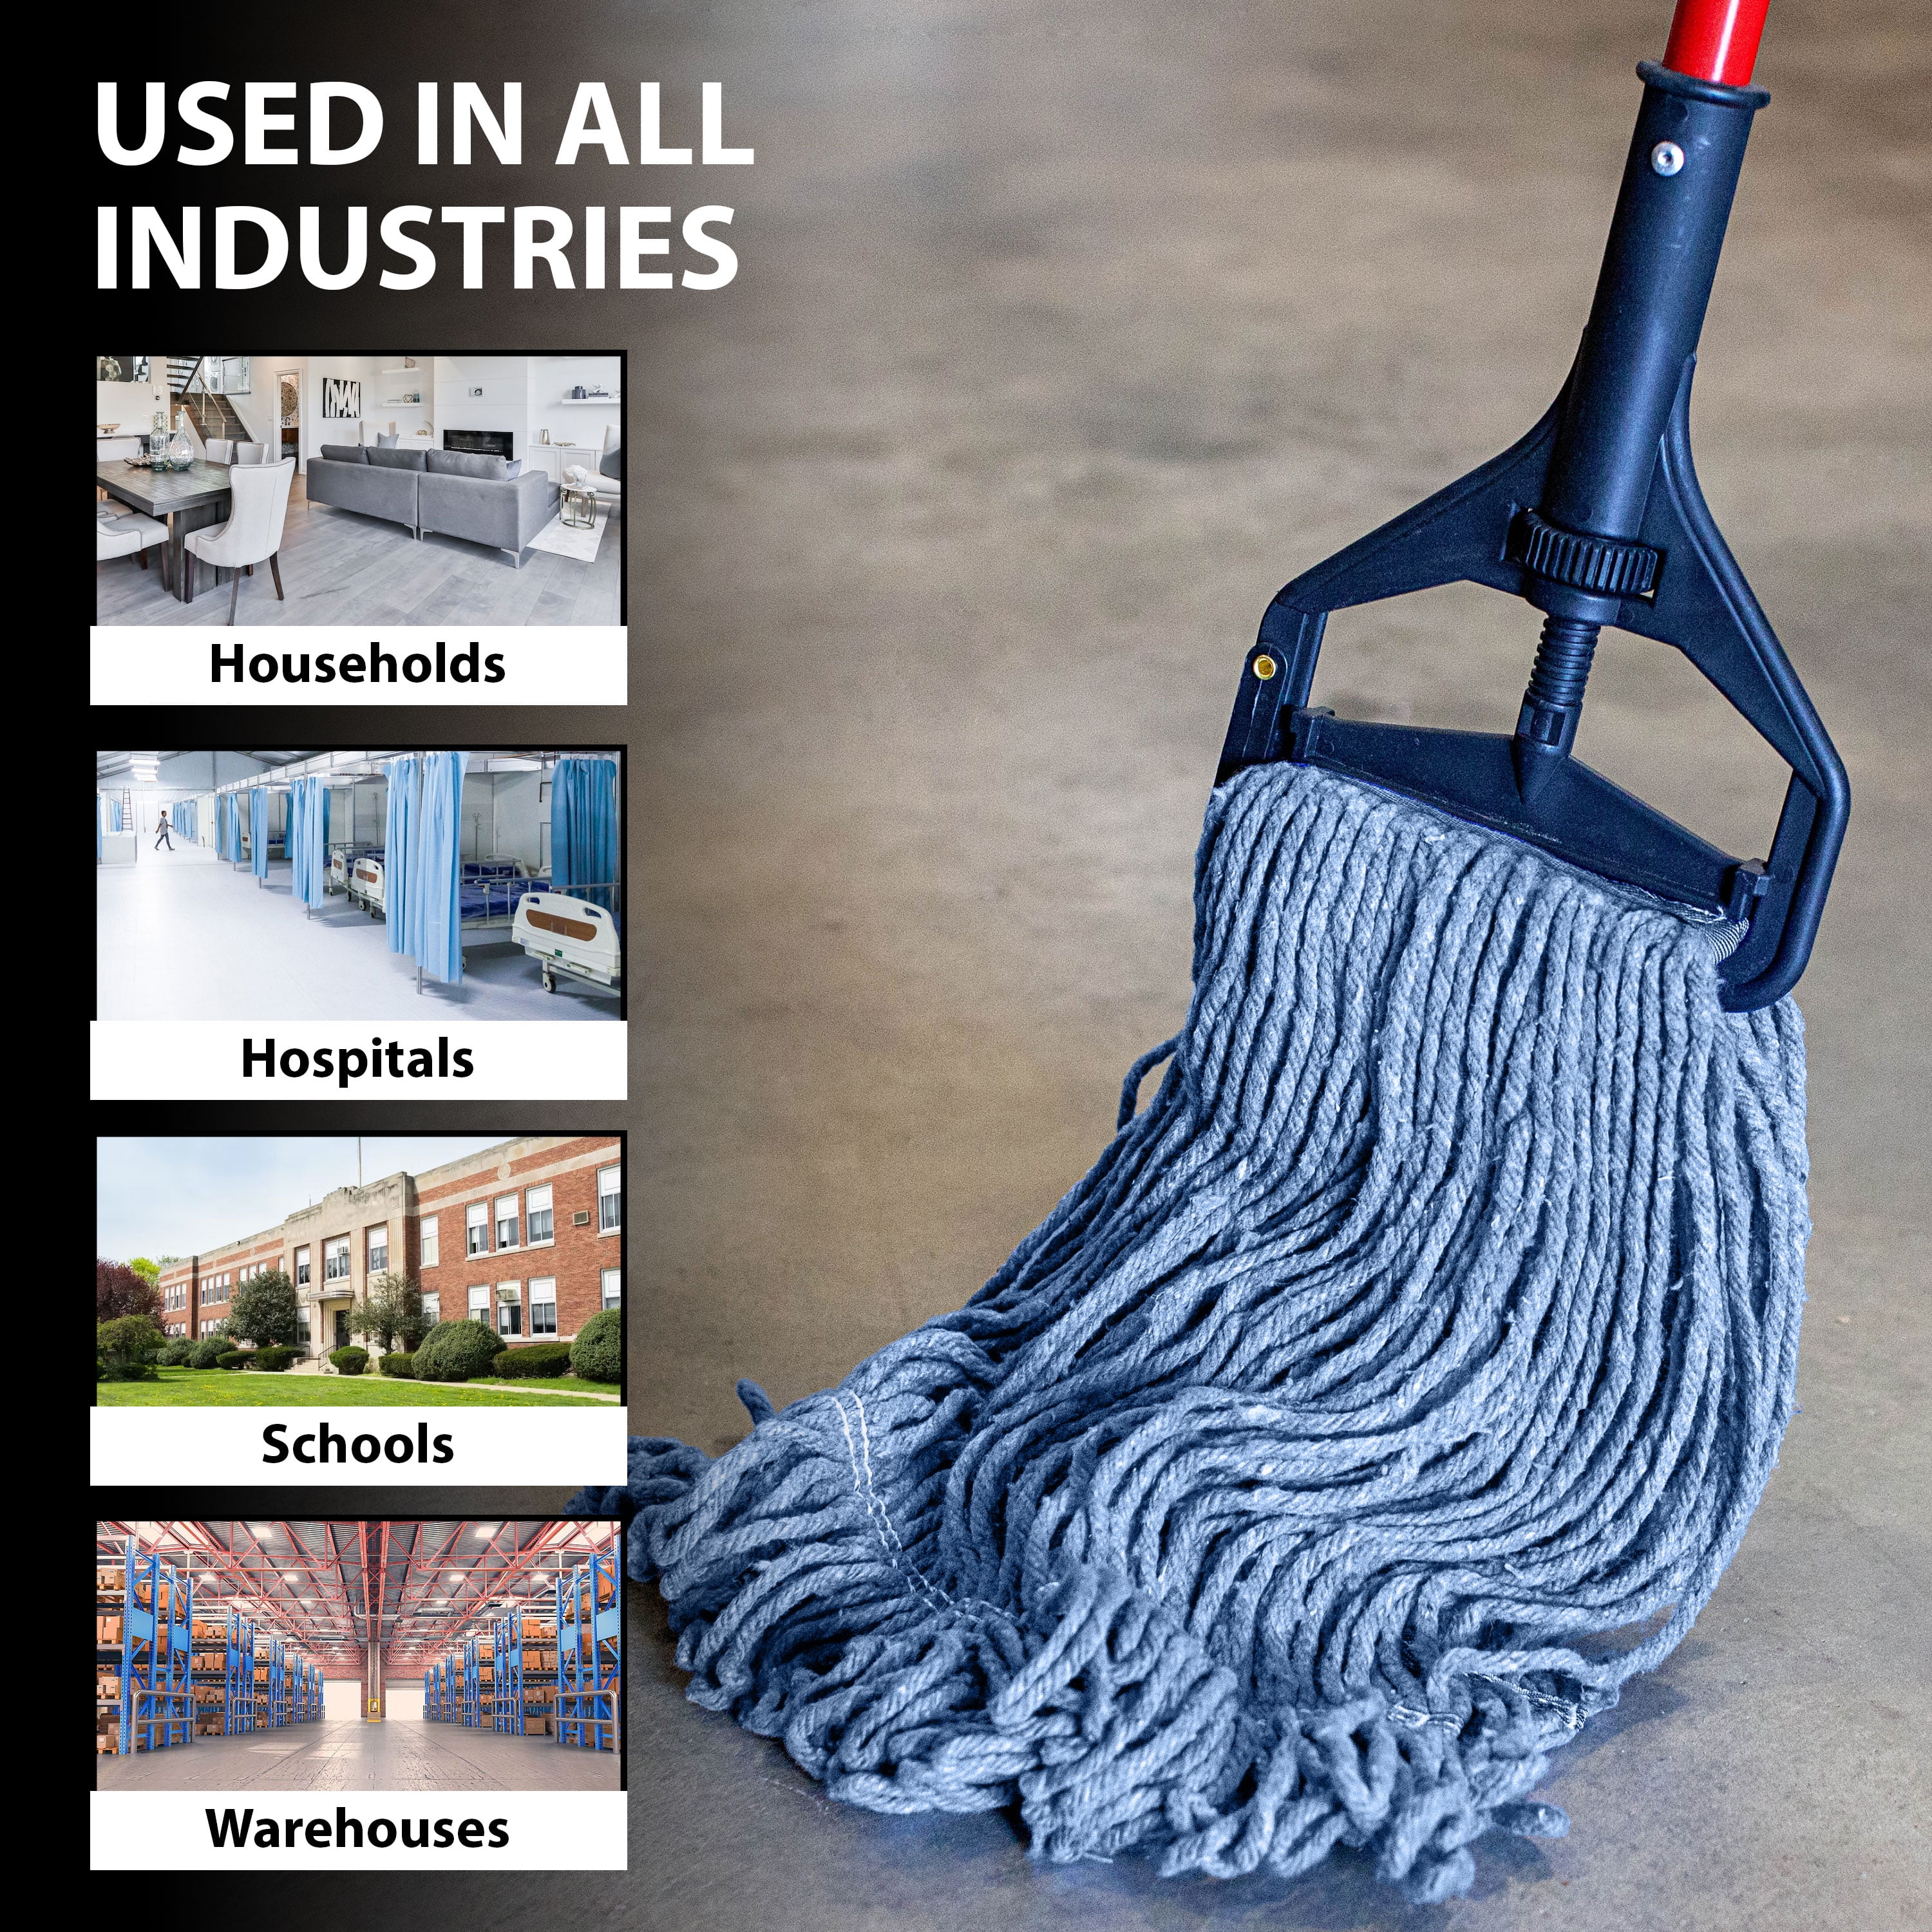 KLEEN HANDLER 24 in., Blue Microfiber Dust Mop, Medium Washable